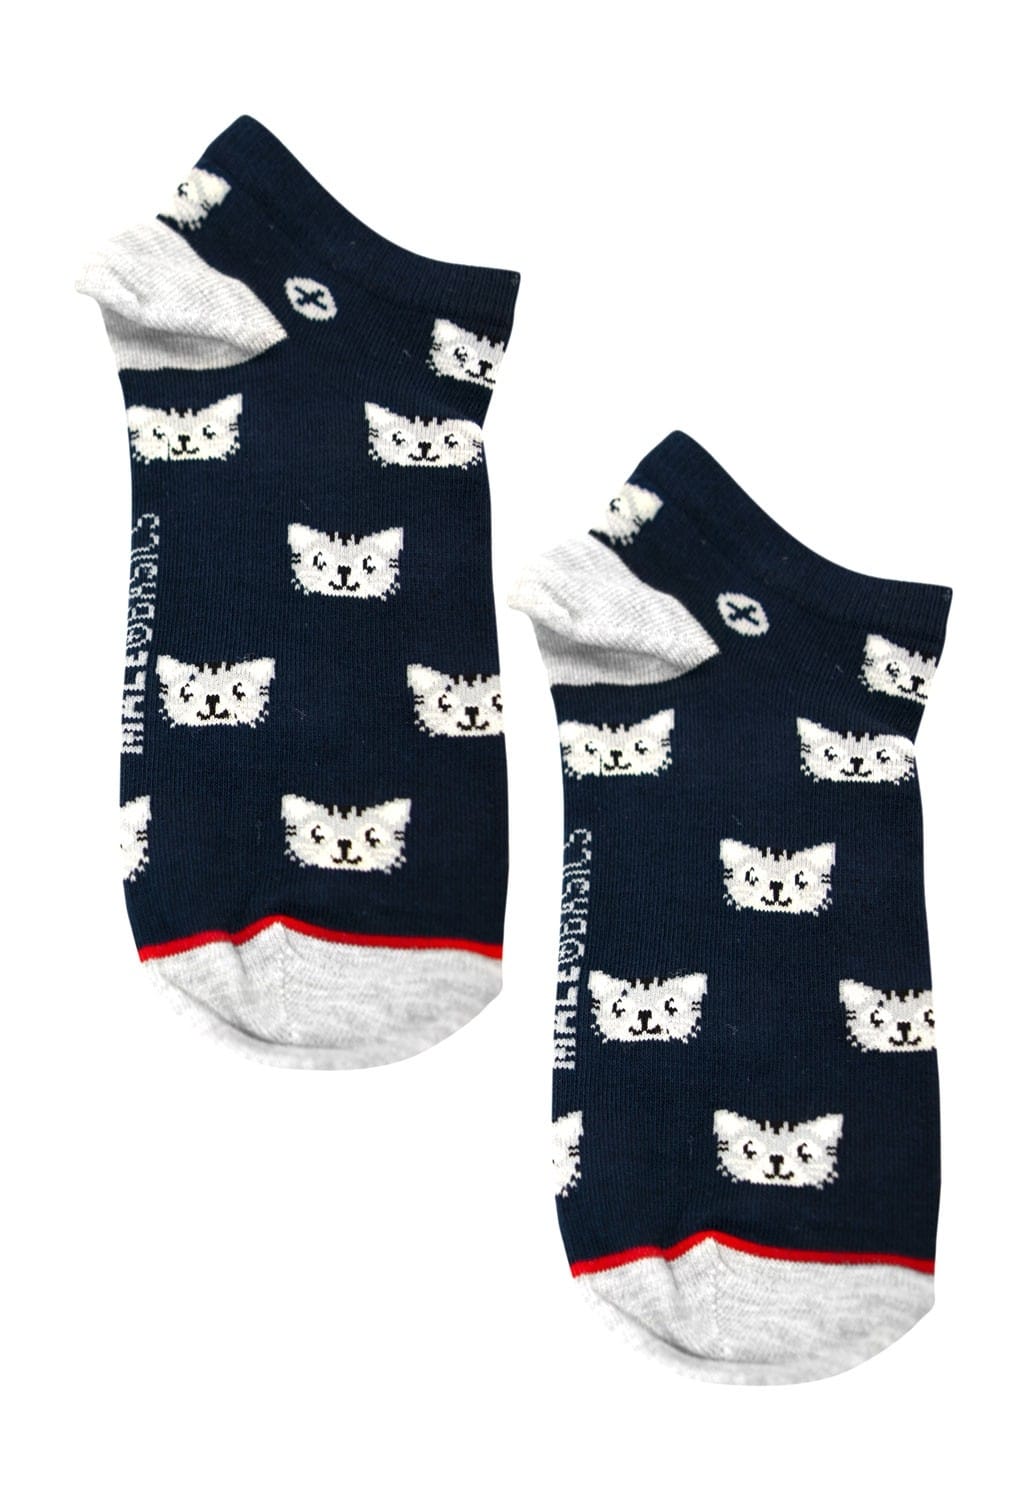 MaleBasics Ankle Socks - Feline